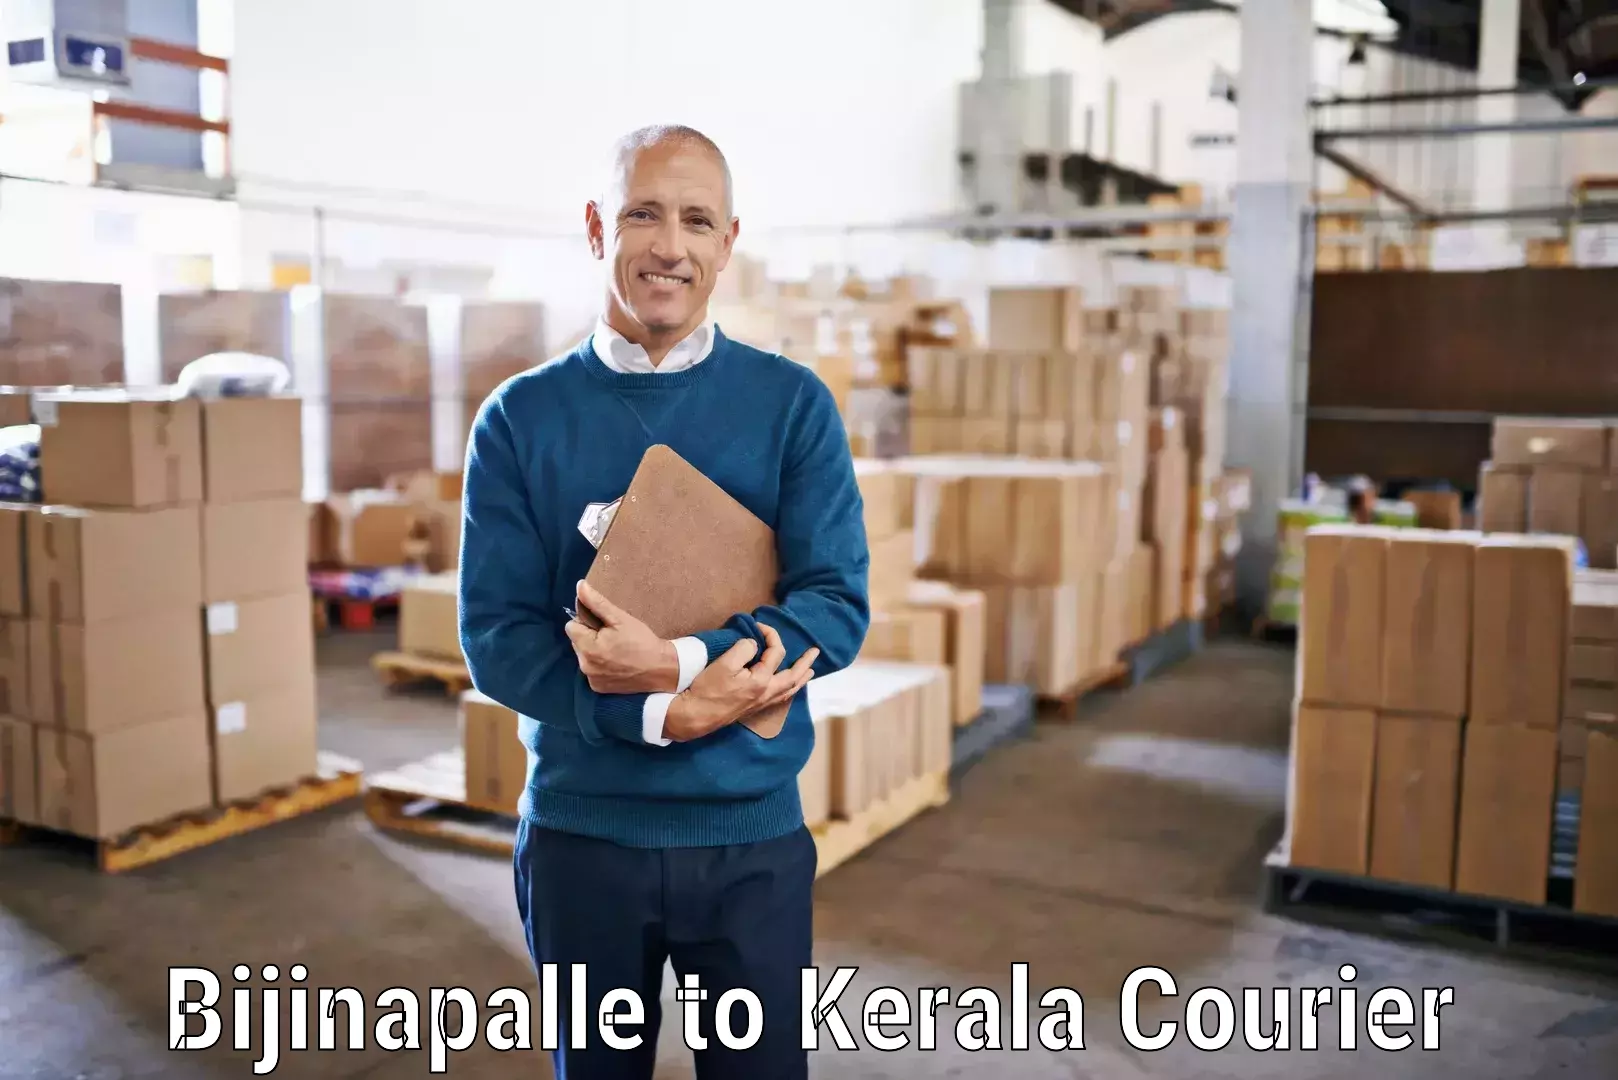 Reliable delivery network Bijinapalle to Tirurangadi